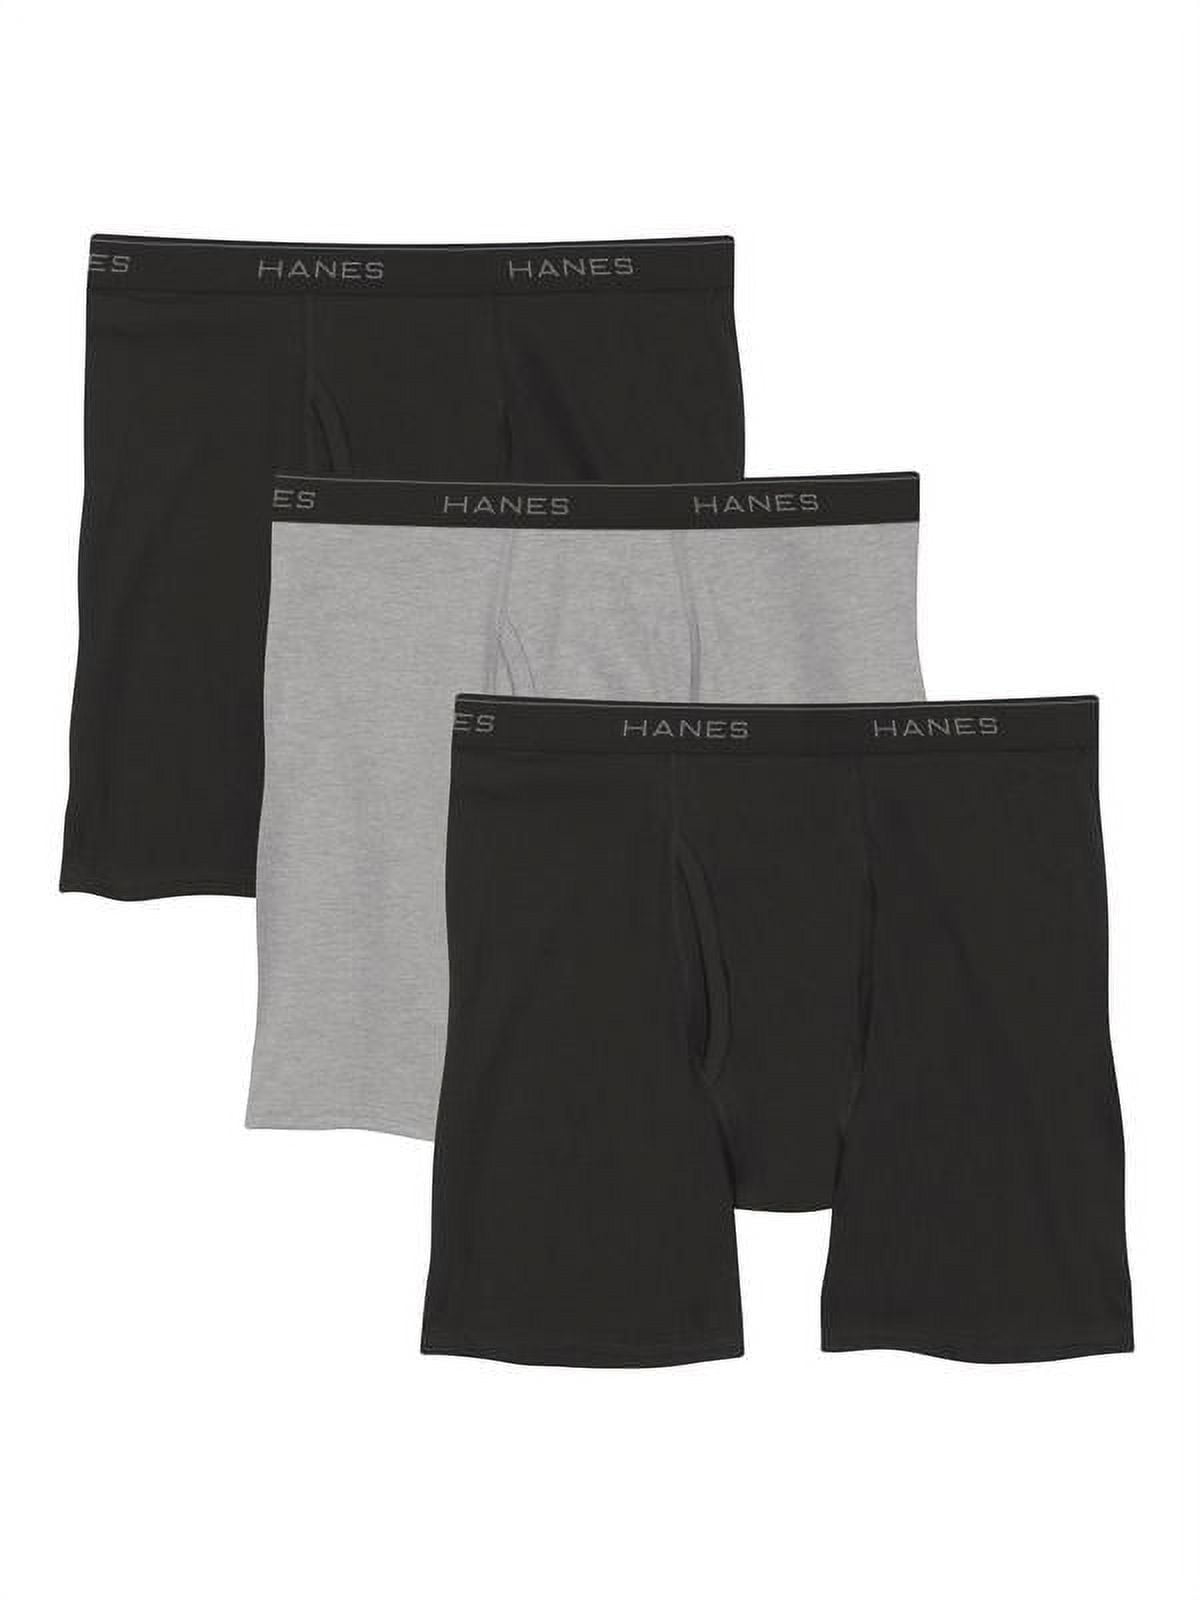 Hanes Men's Stretch Black/Grey Boxer Briefs, 3 Pack - Walmart.com